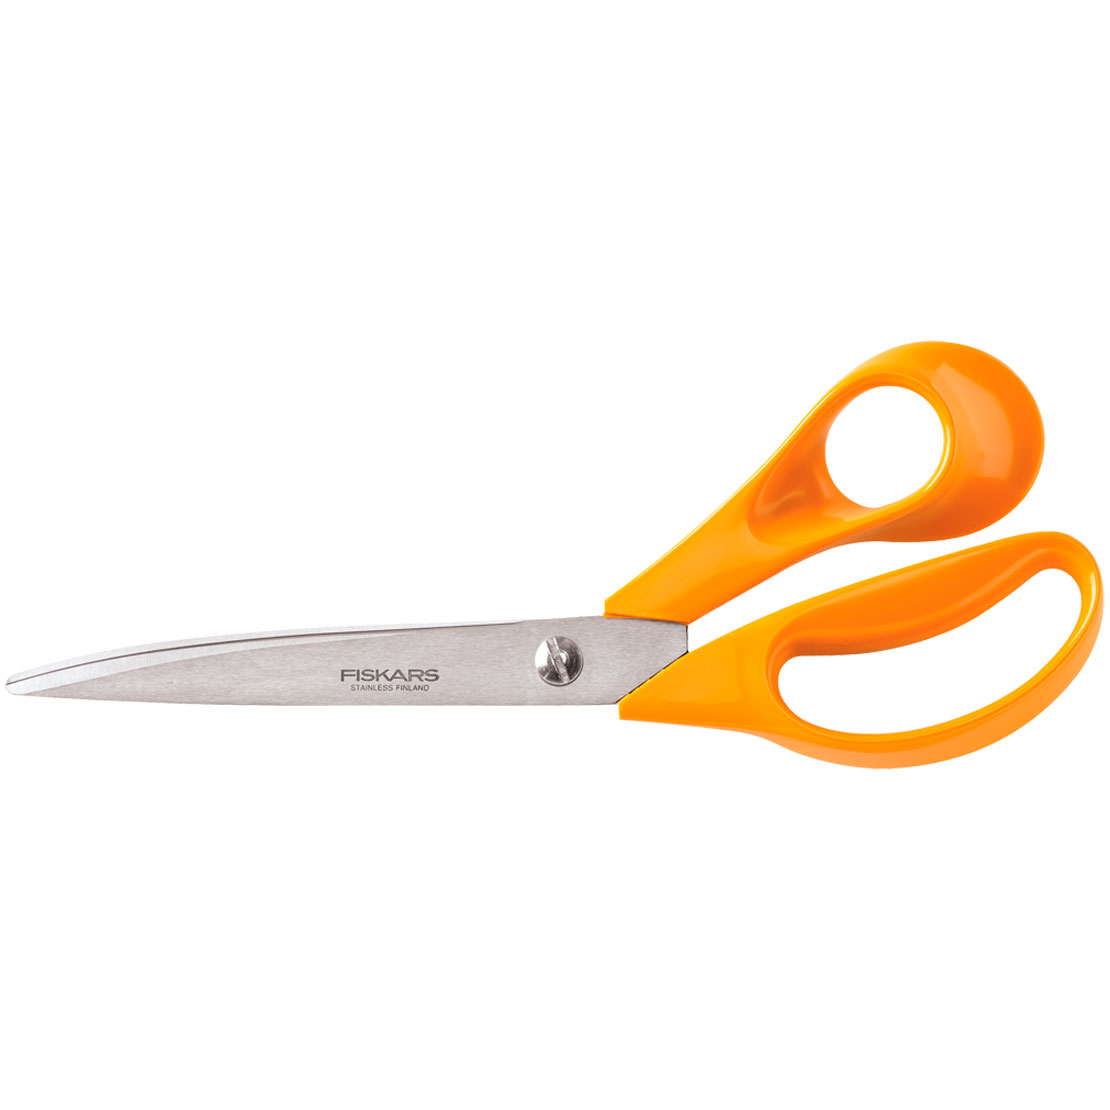 O-Series scissors